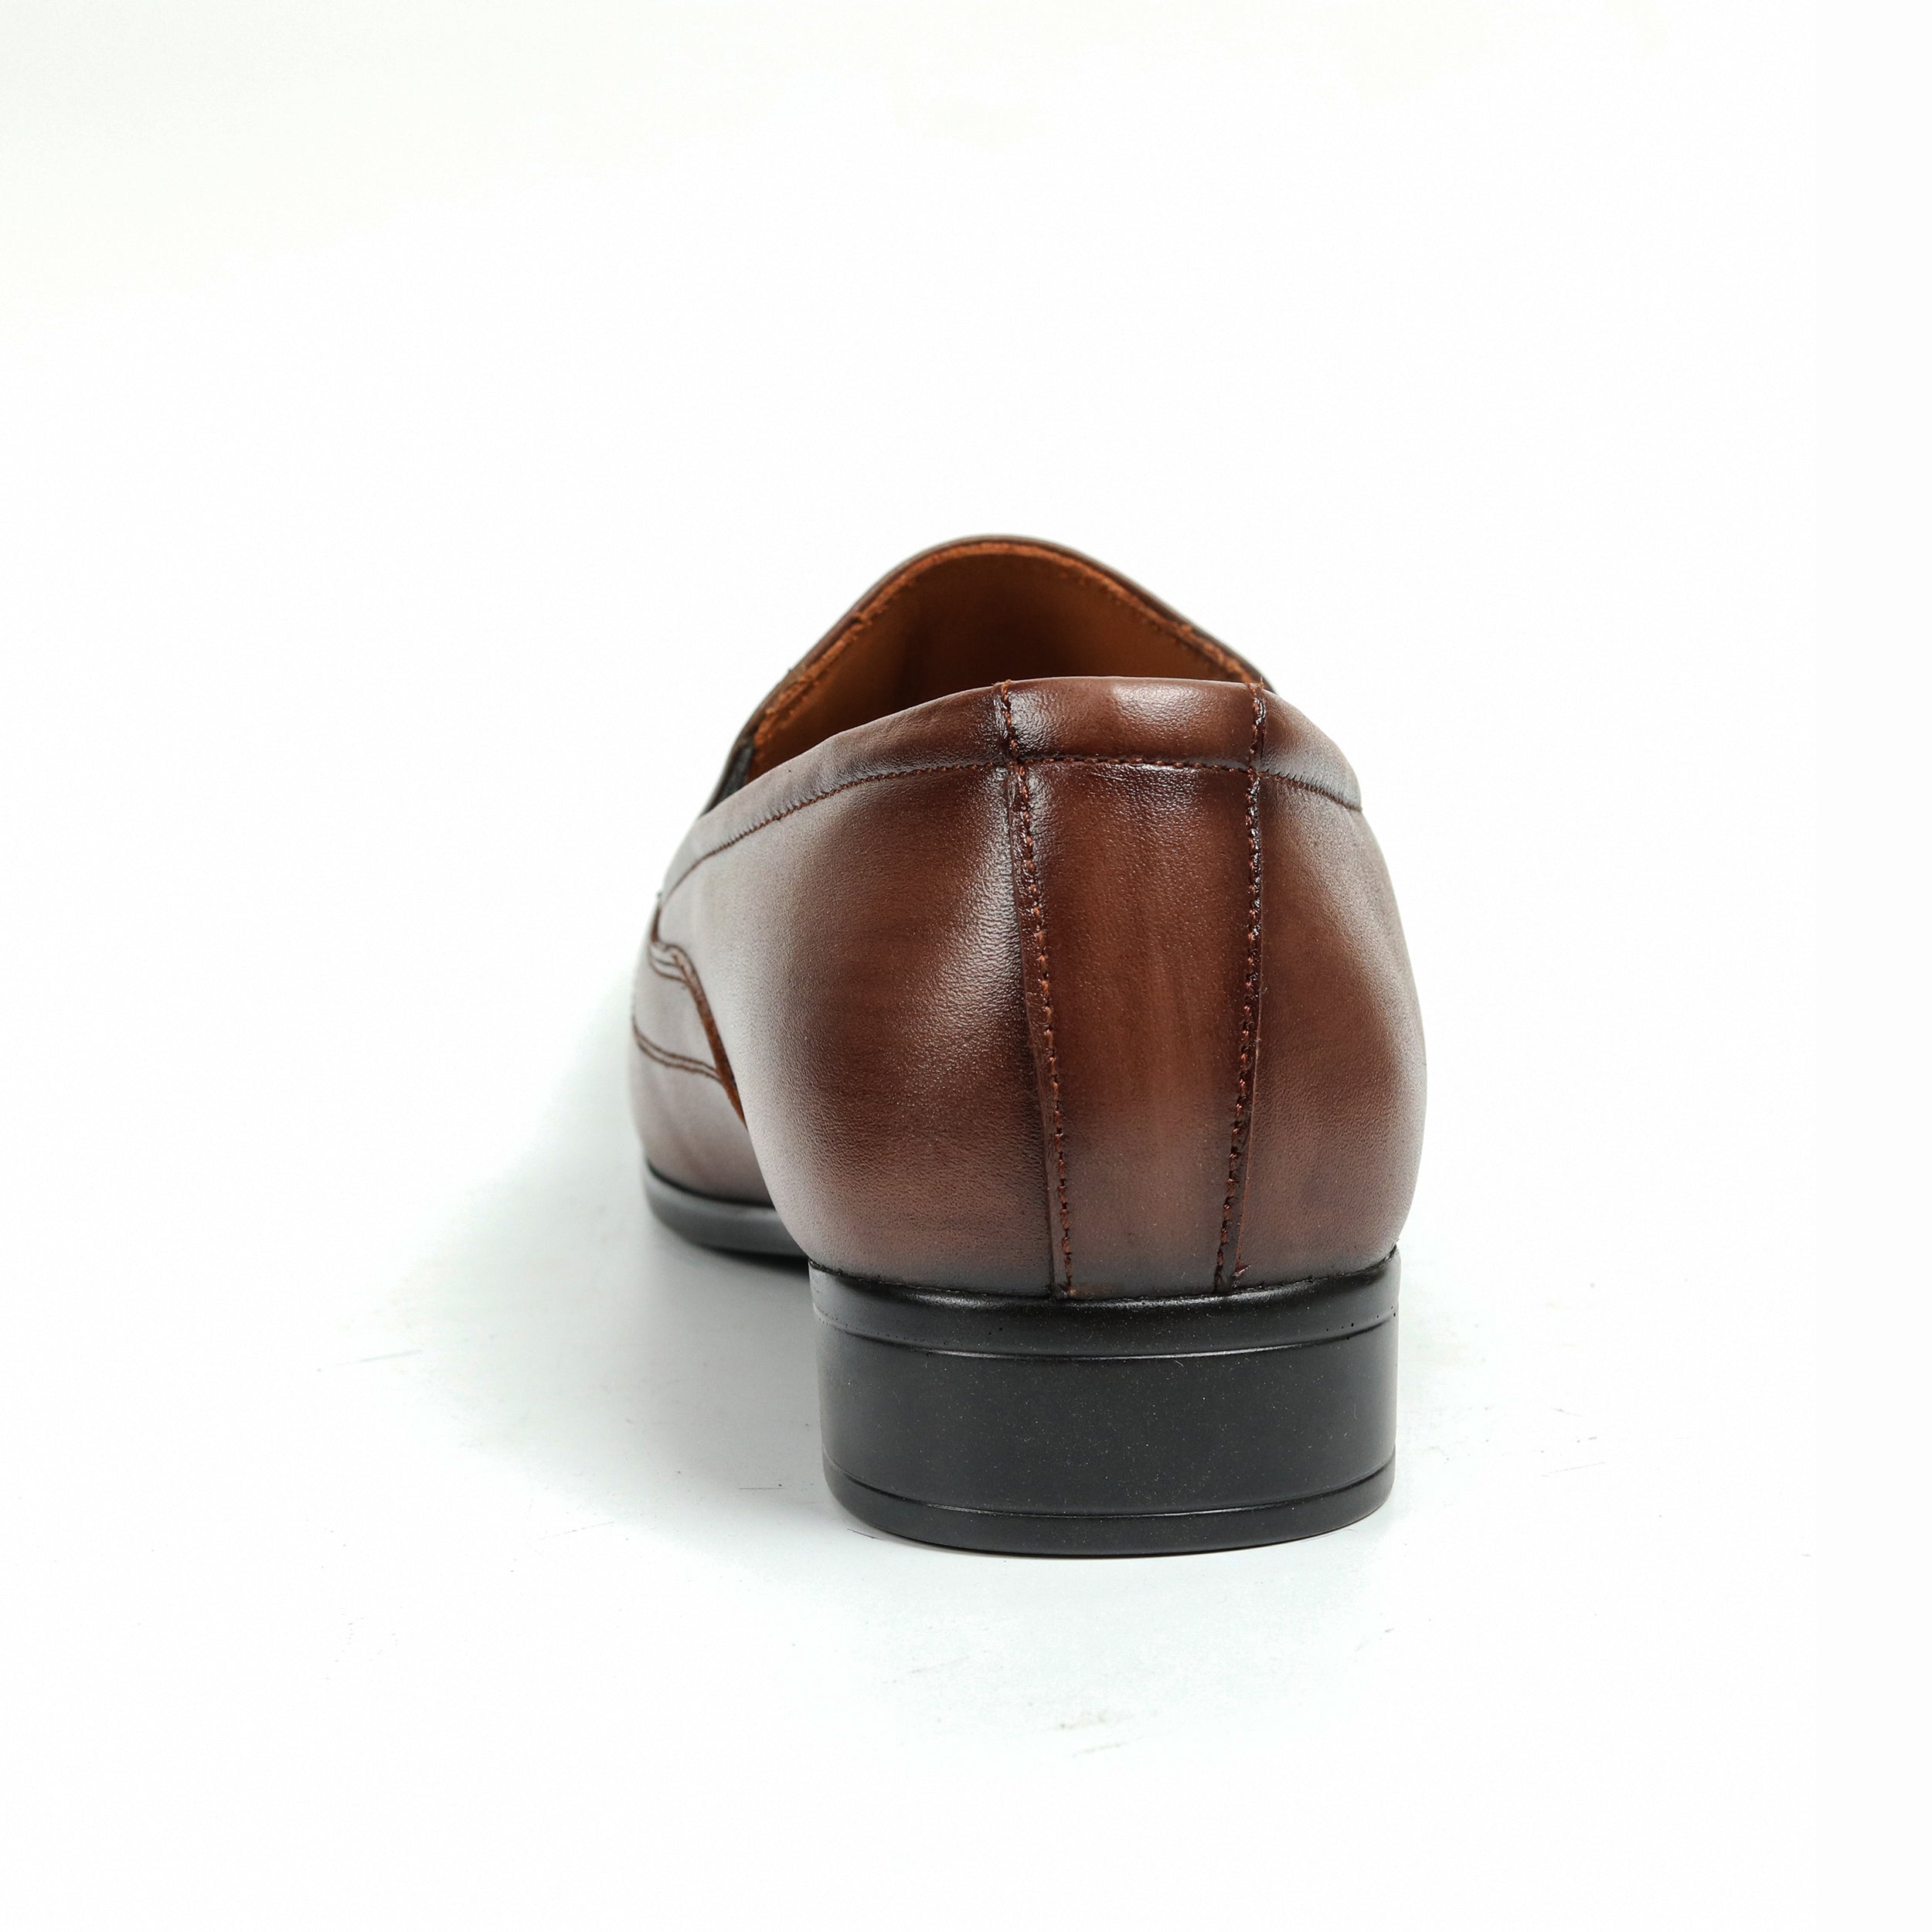 Zays Leather Premium Formal Shoe For Men (Brown) - ZAYSSF05